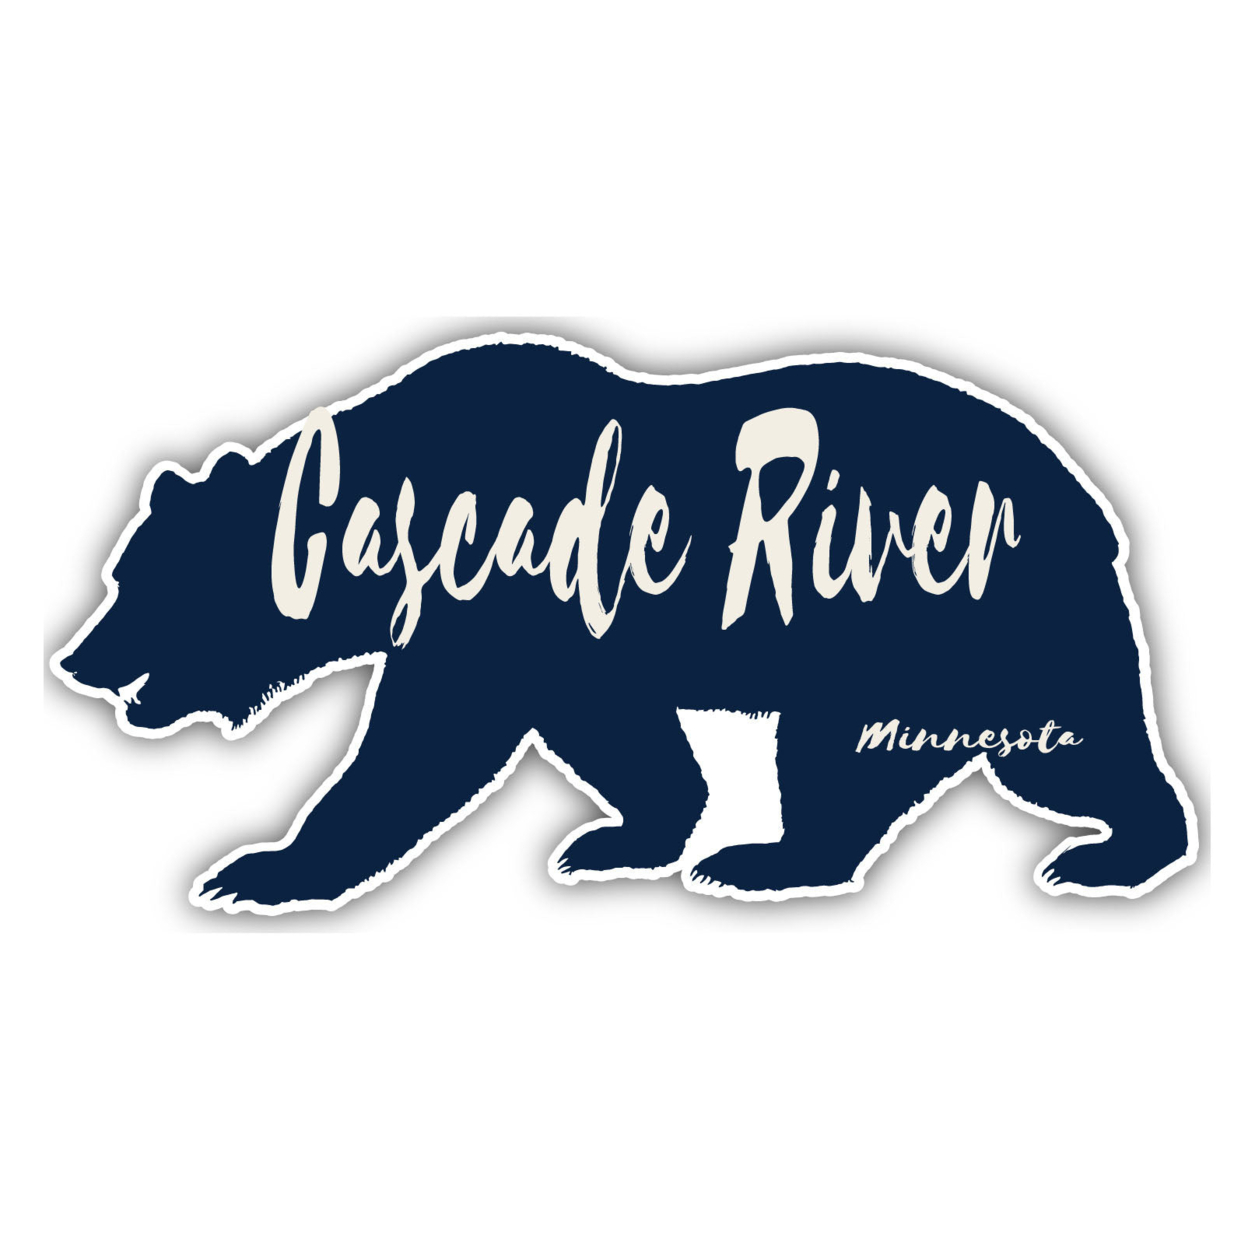 Cascade River Minnesota Souvenir Decorative Stickers (Choose Theme And Size) - 4-Pack, 12-Inch, Bear